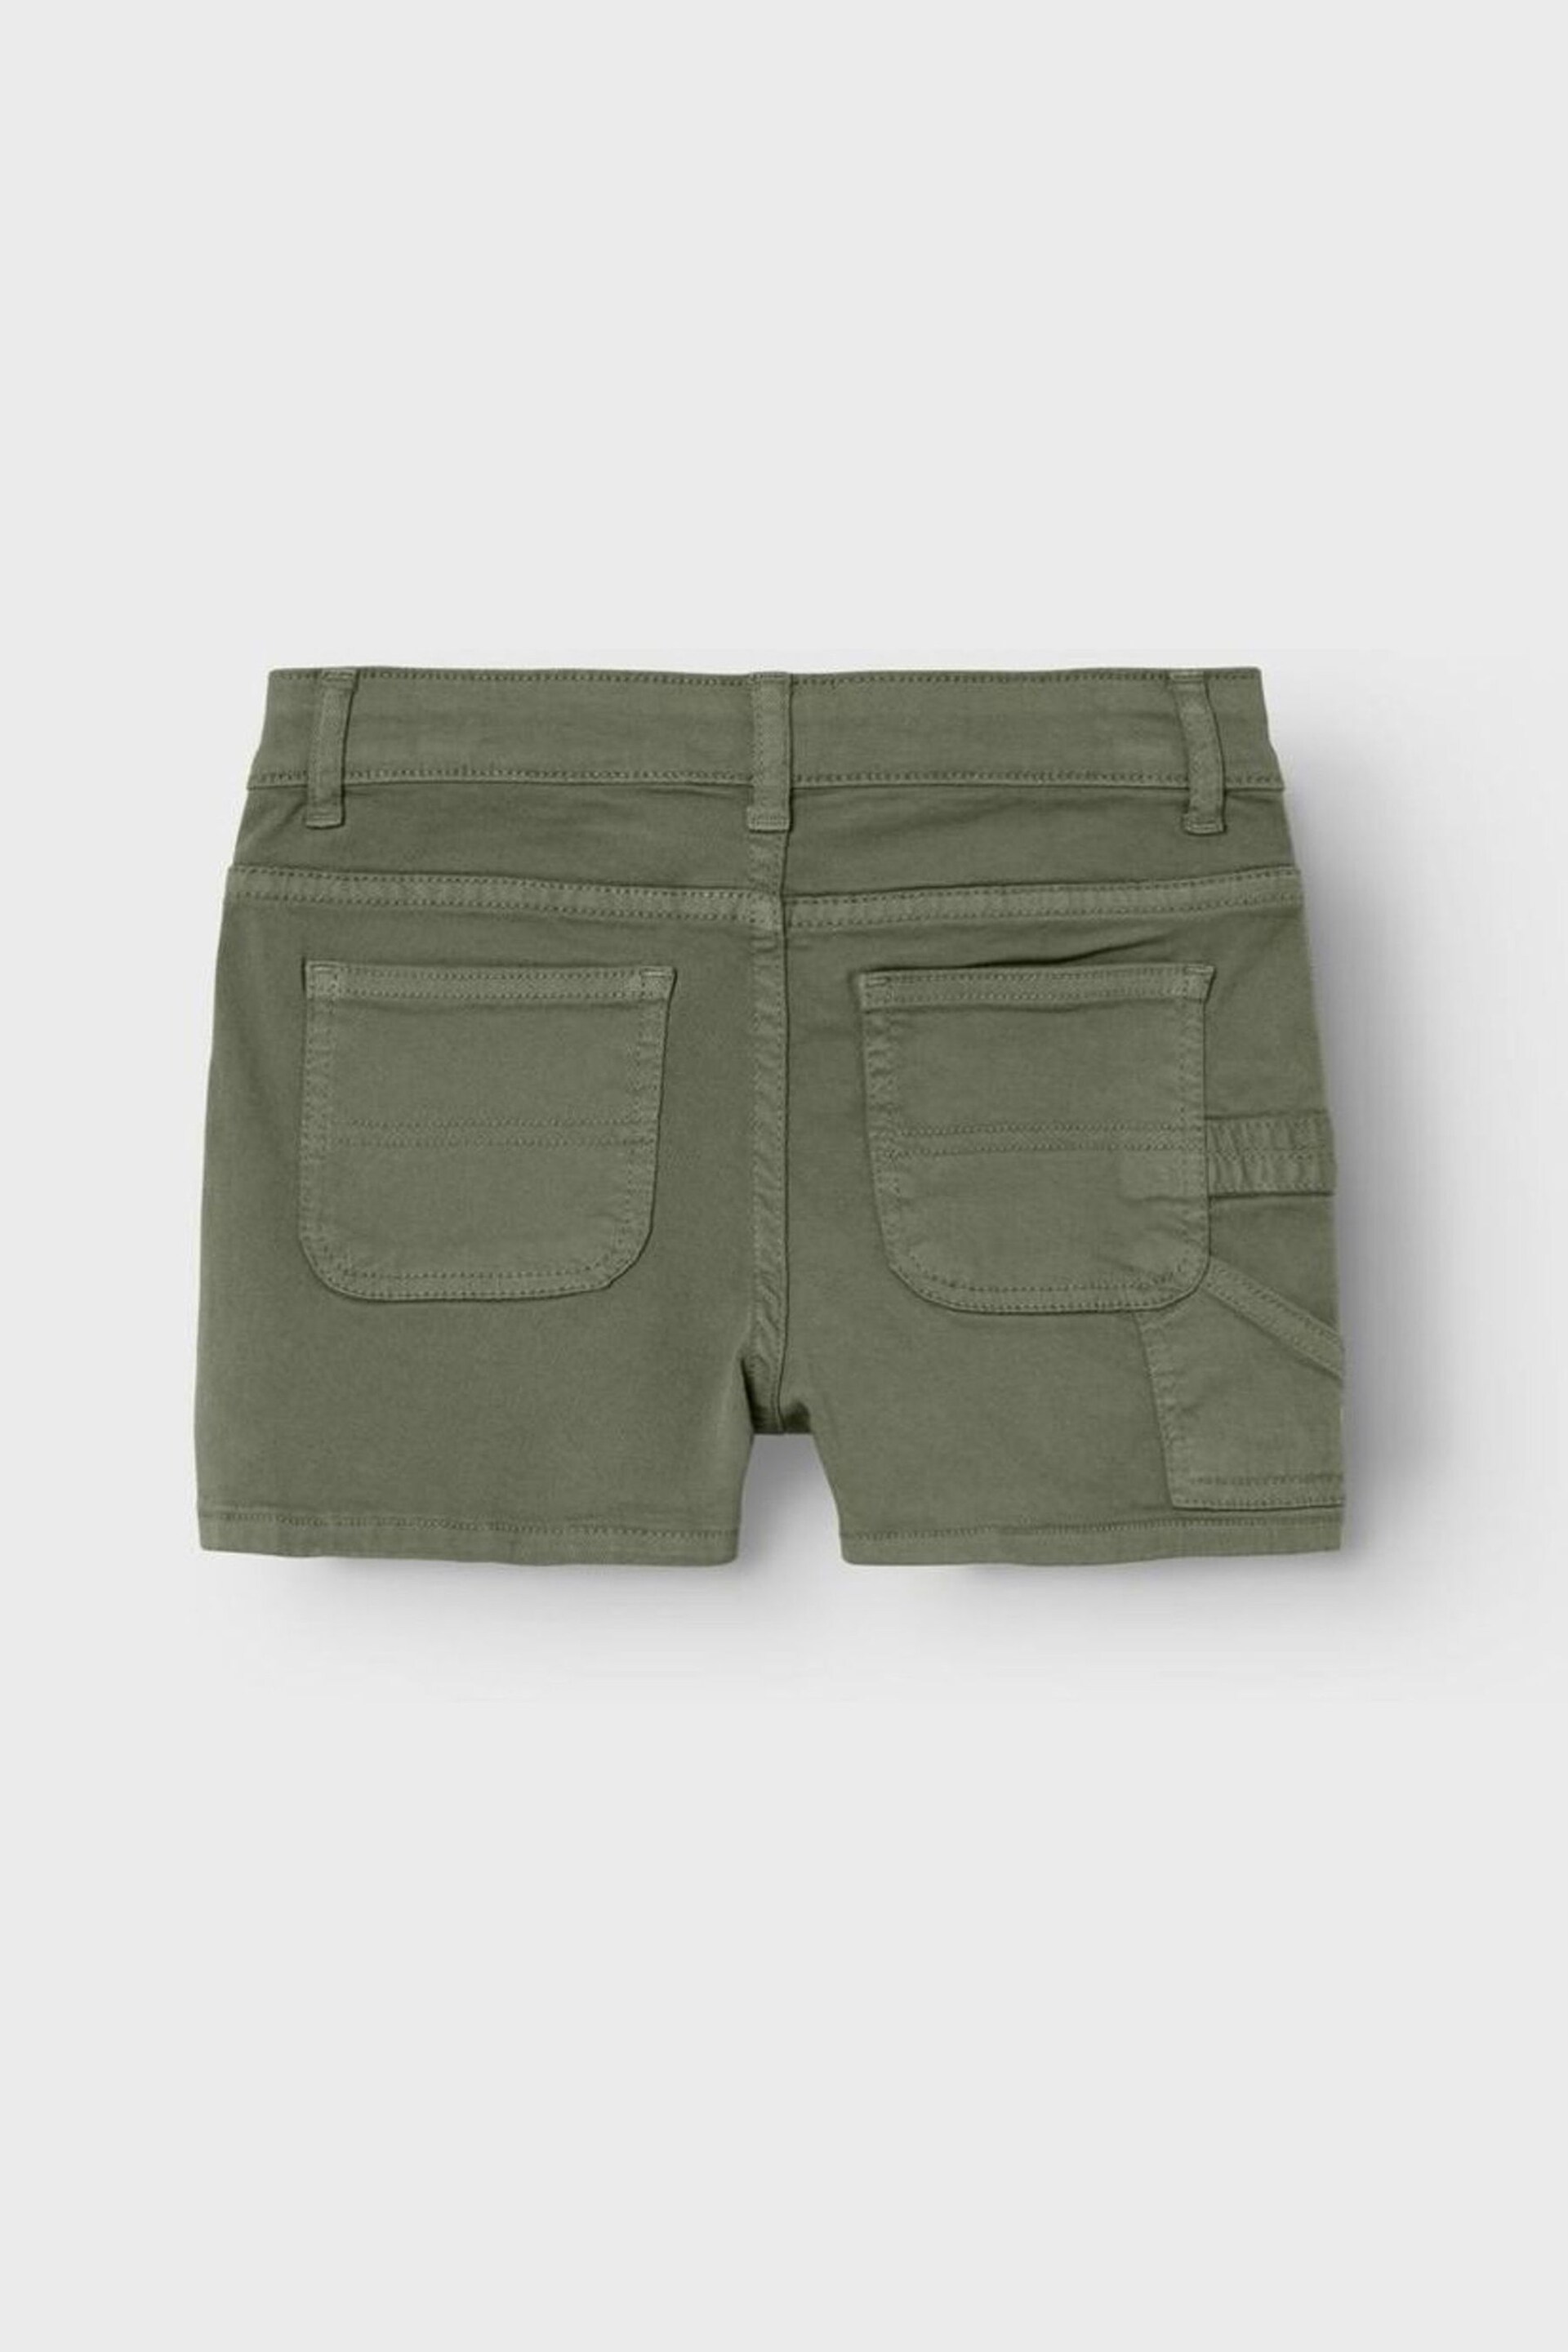 Name It Green Pocket Shorts - Image 2 of 3